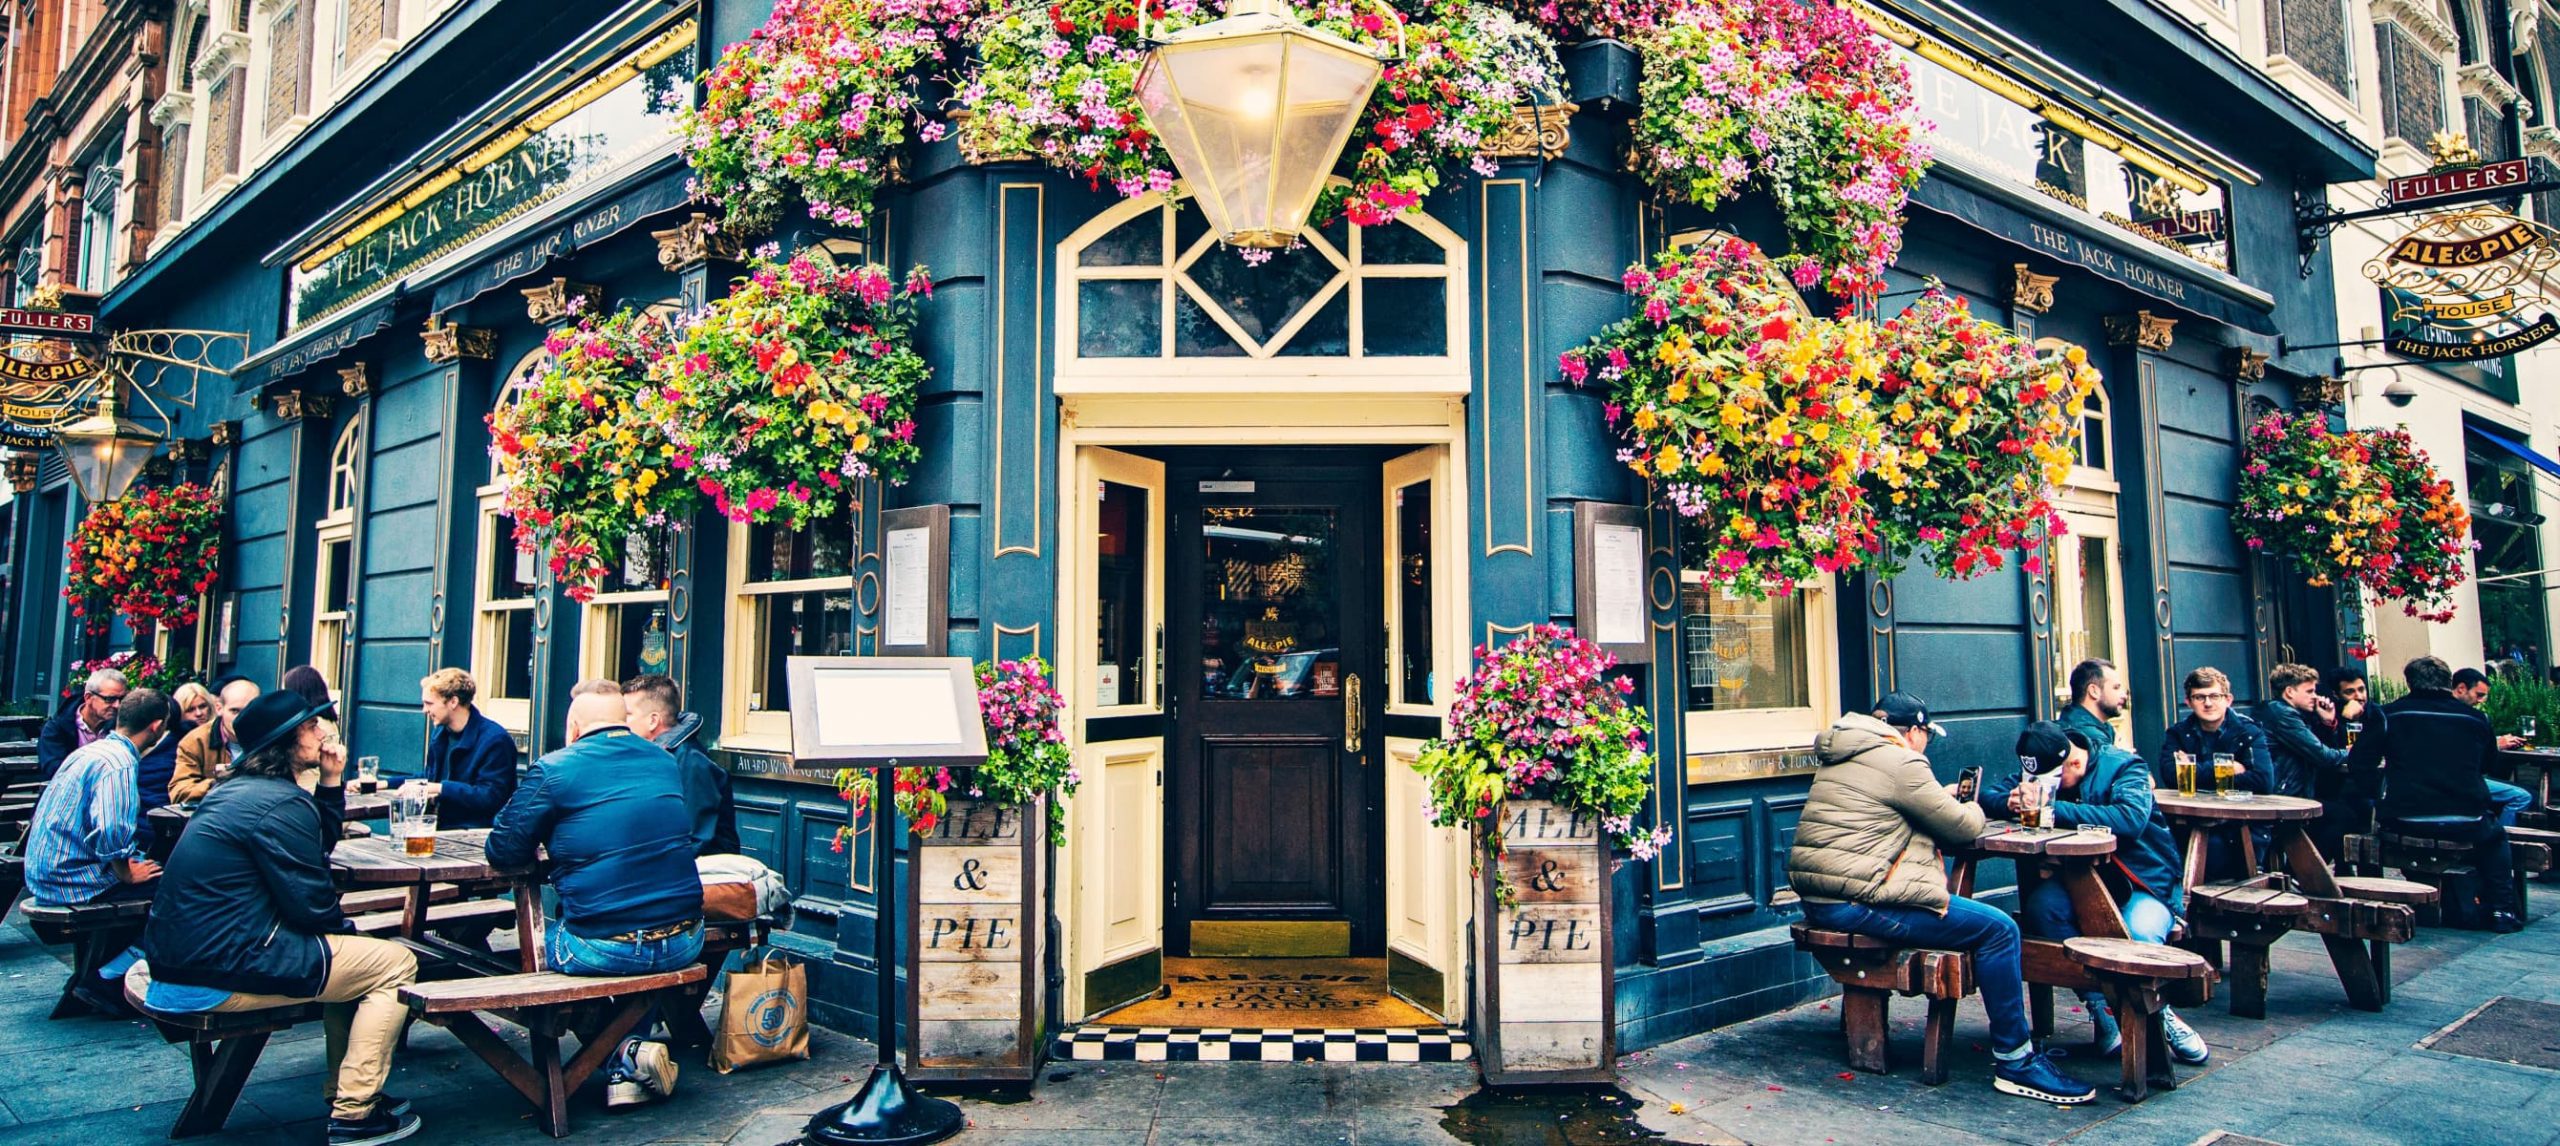 A pub in London, UK.